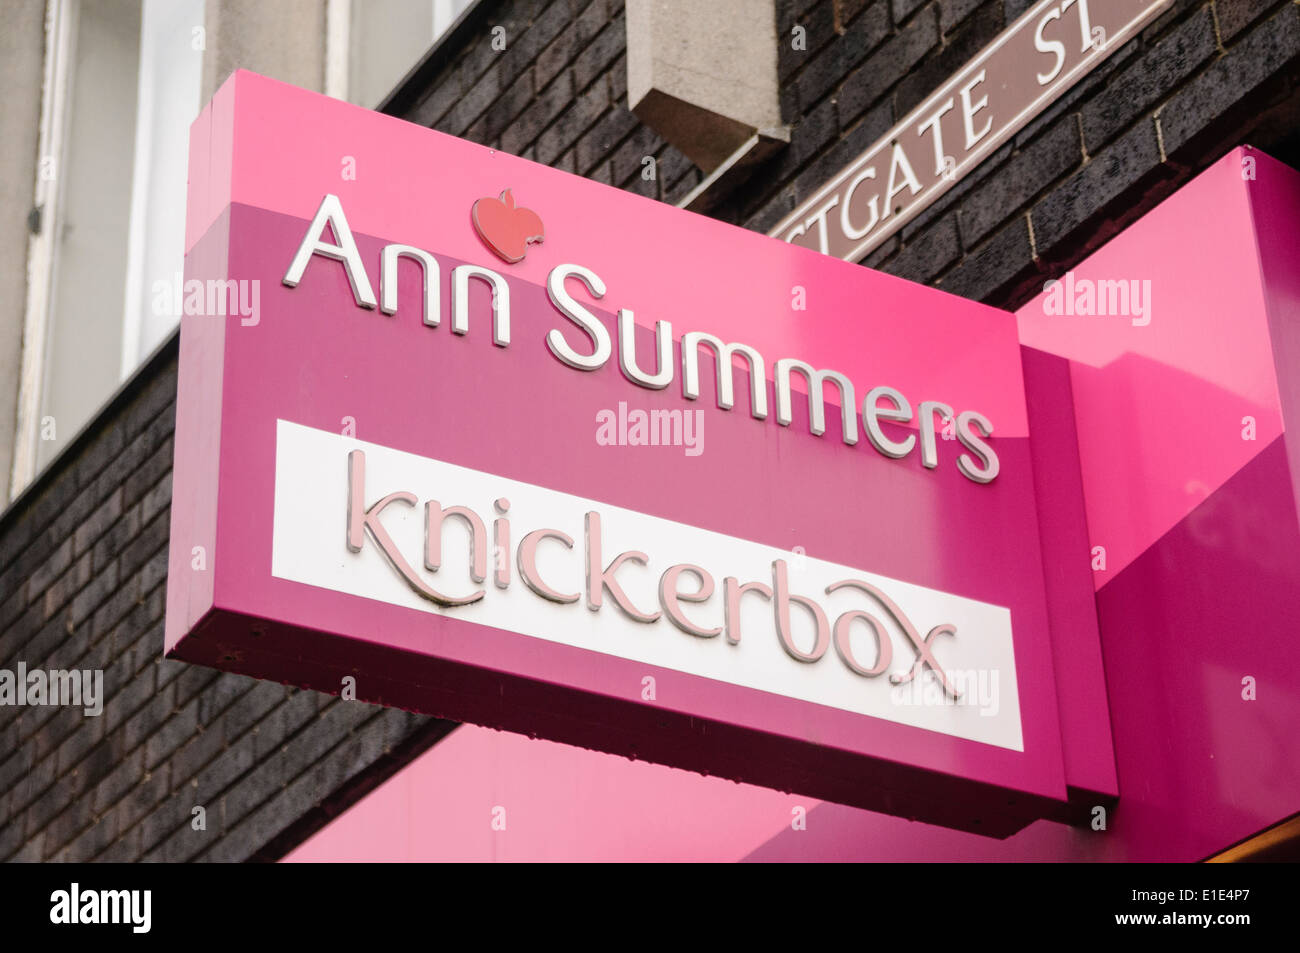 Ann Summers Knickerbox shop Stock Photo